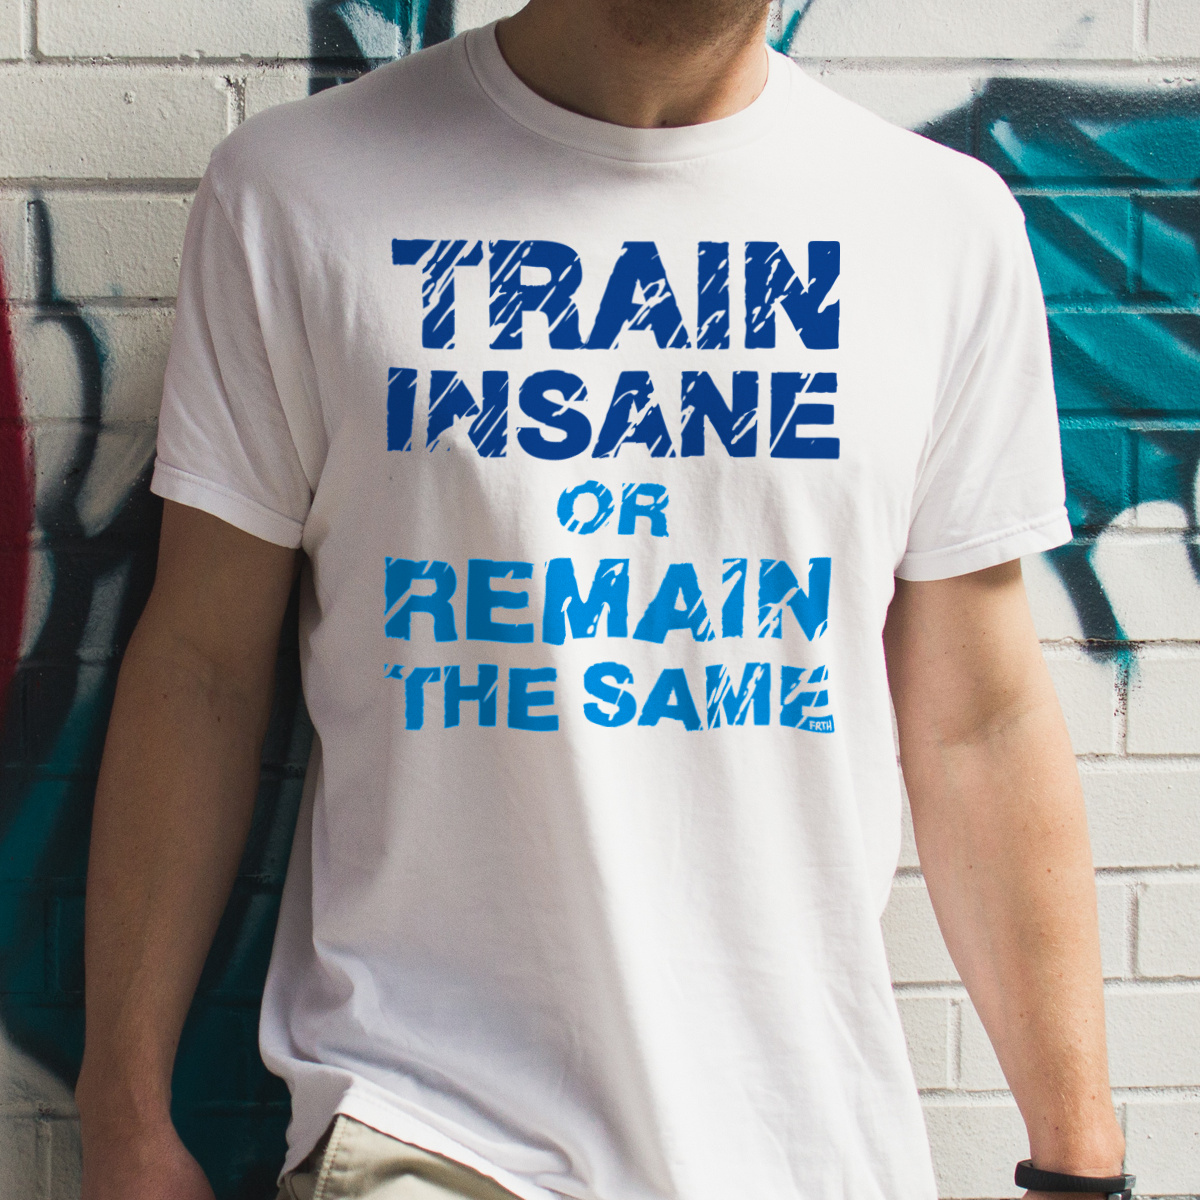 Try Insane Or Remain The Same - Męska Koszulka Biała